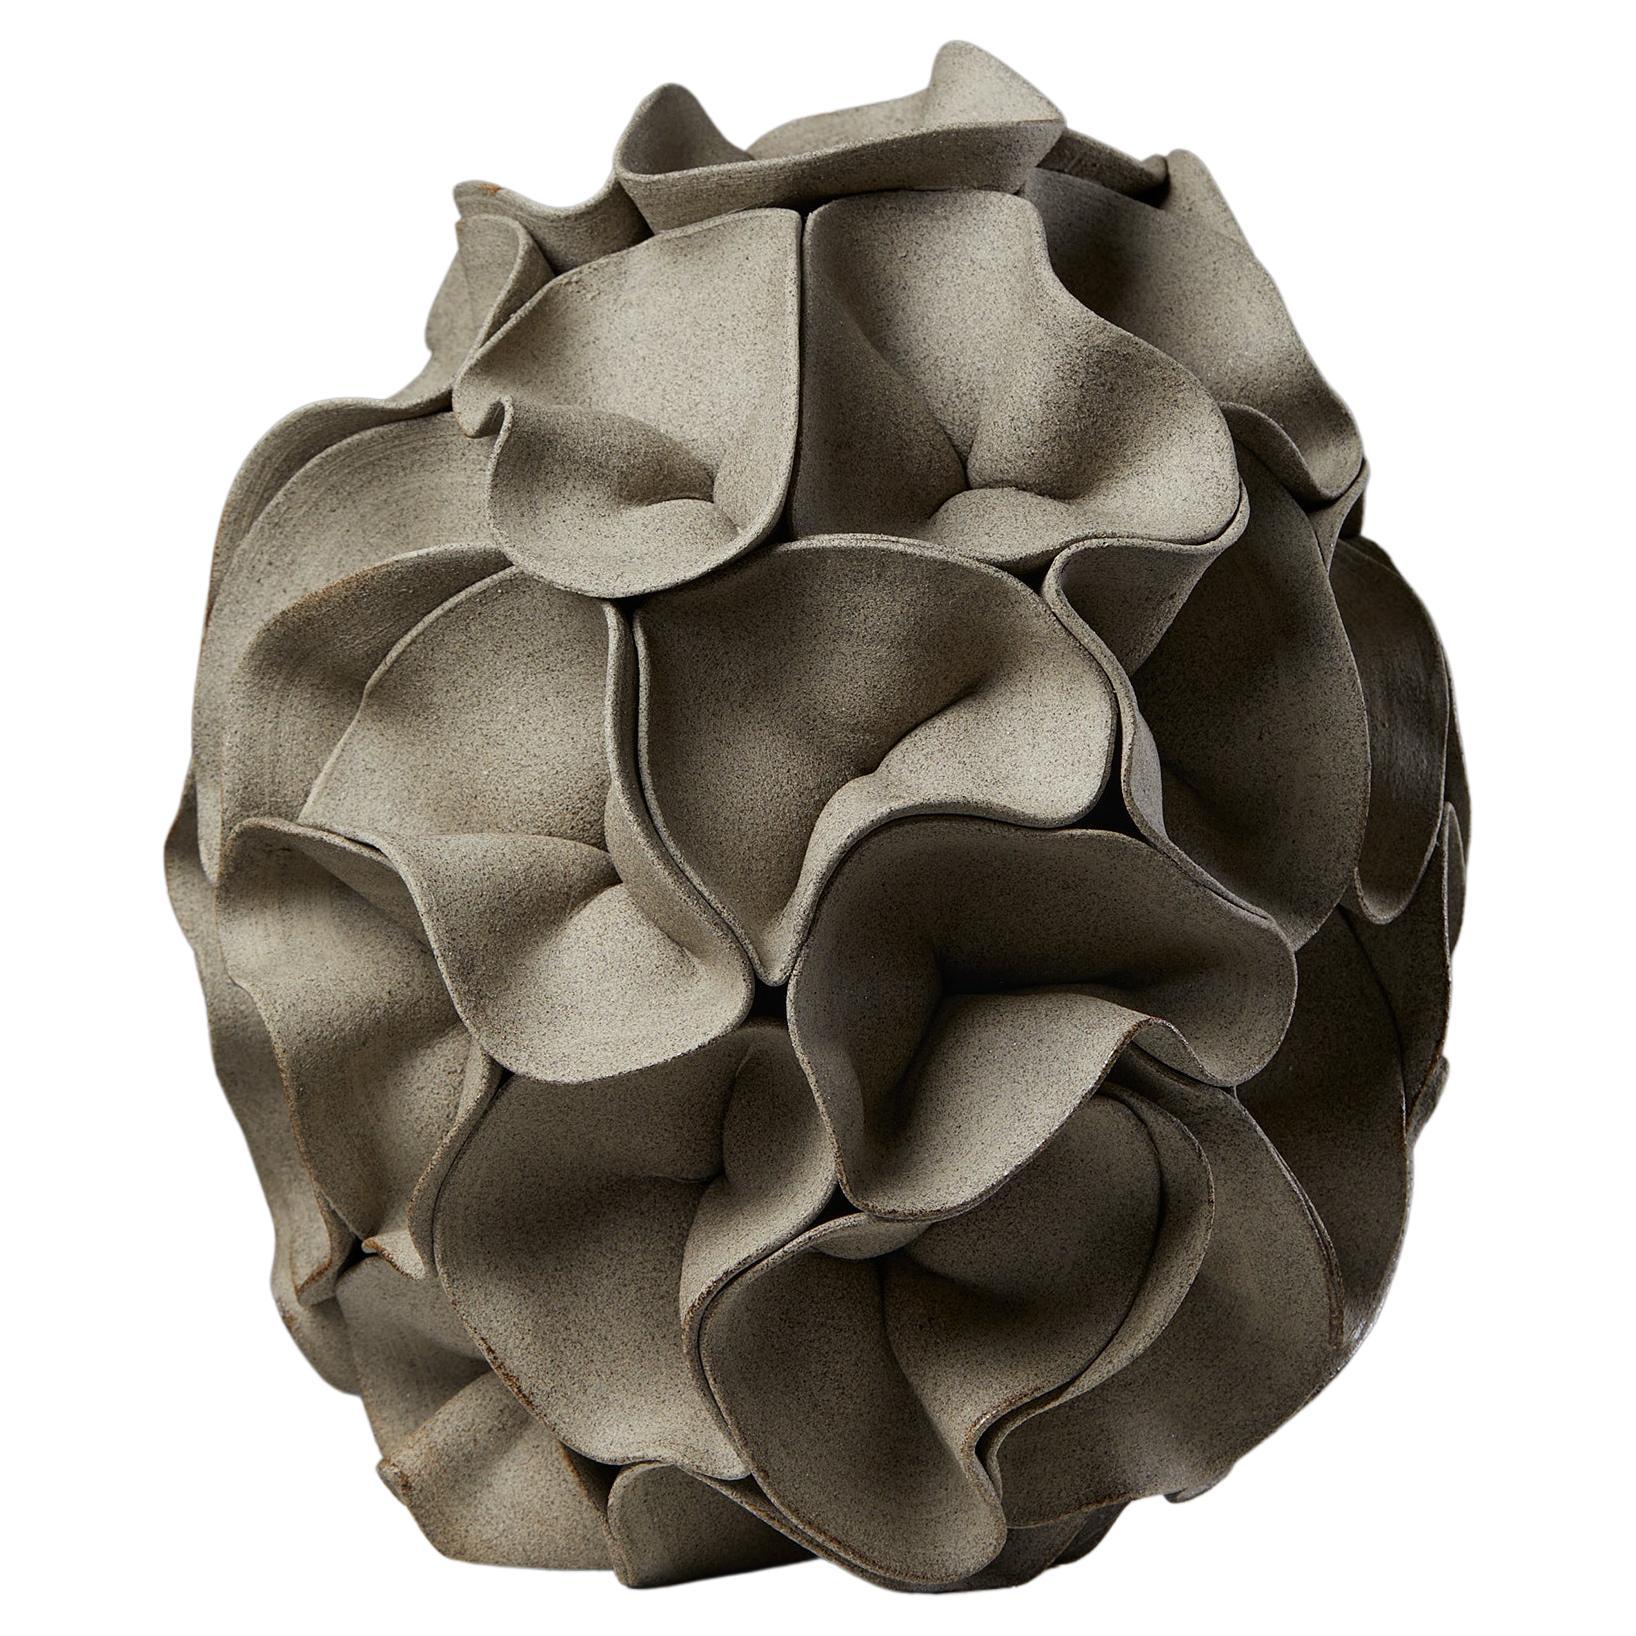 Ceramic Sculpture ‘Hybrid’ by Alvina Jakobsson, Sweden, 2022